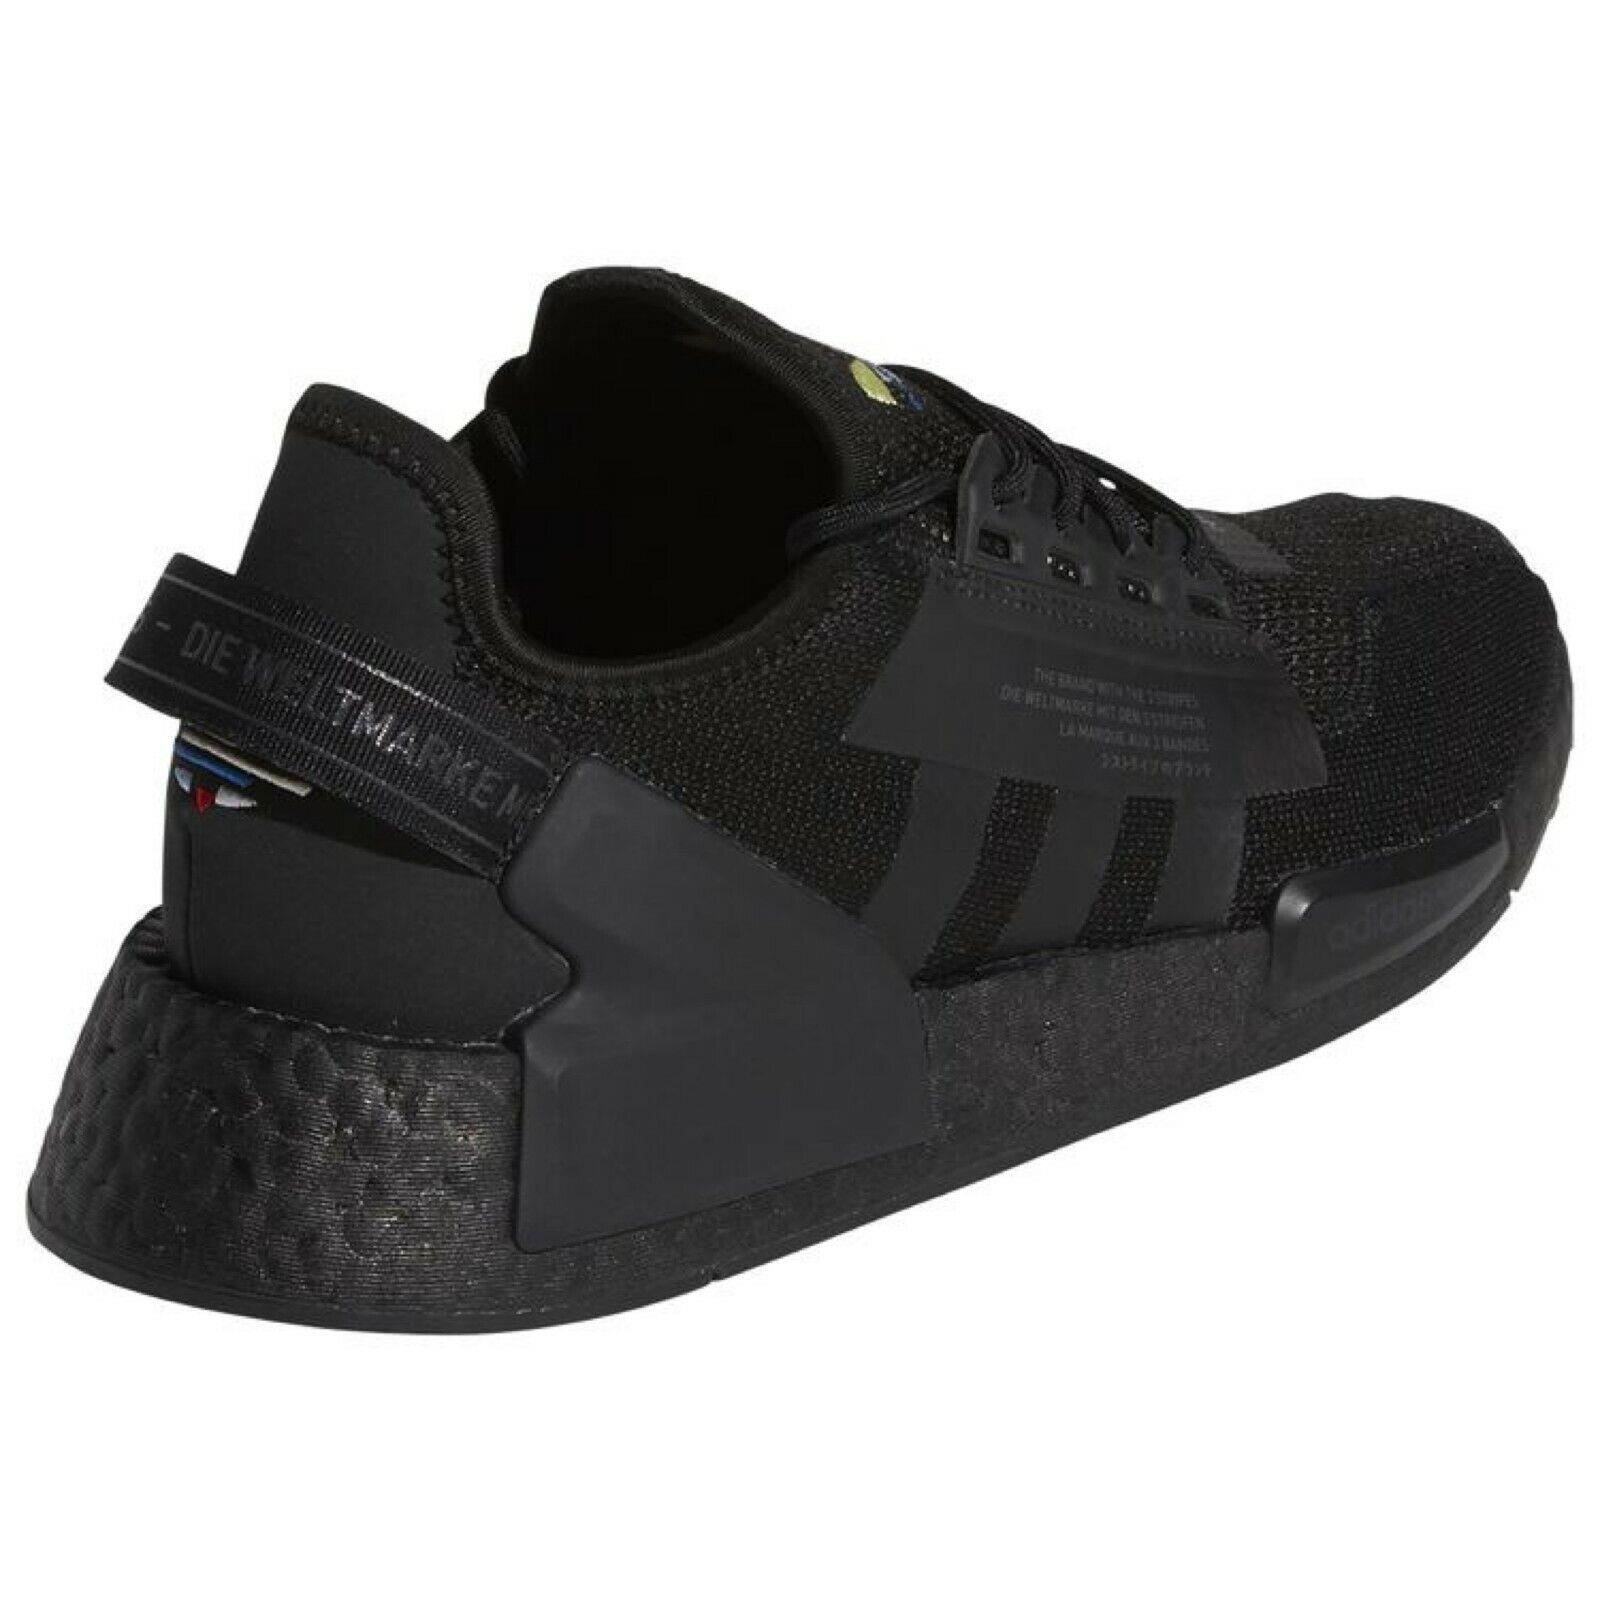 Adidas shoes Originals - Black , Black/Multi Manufacturer 3